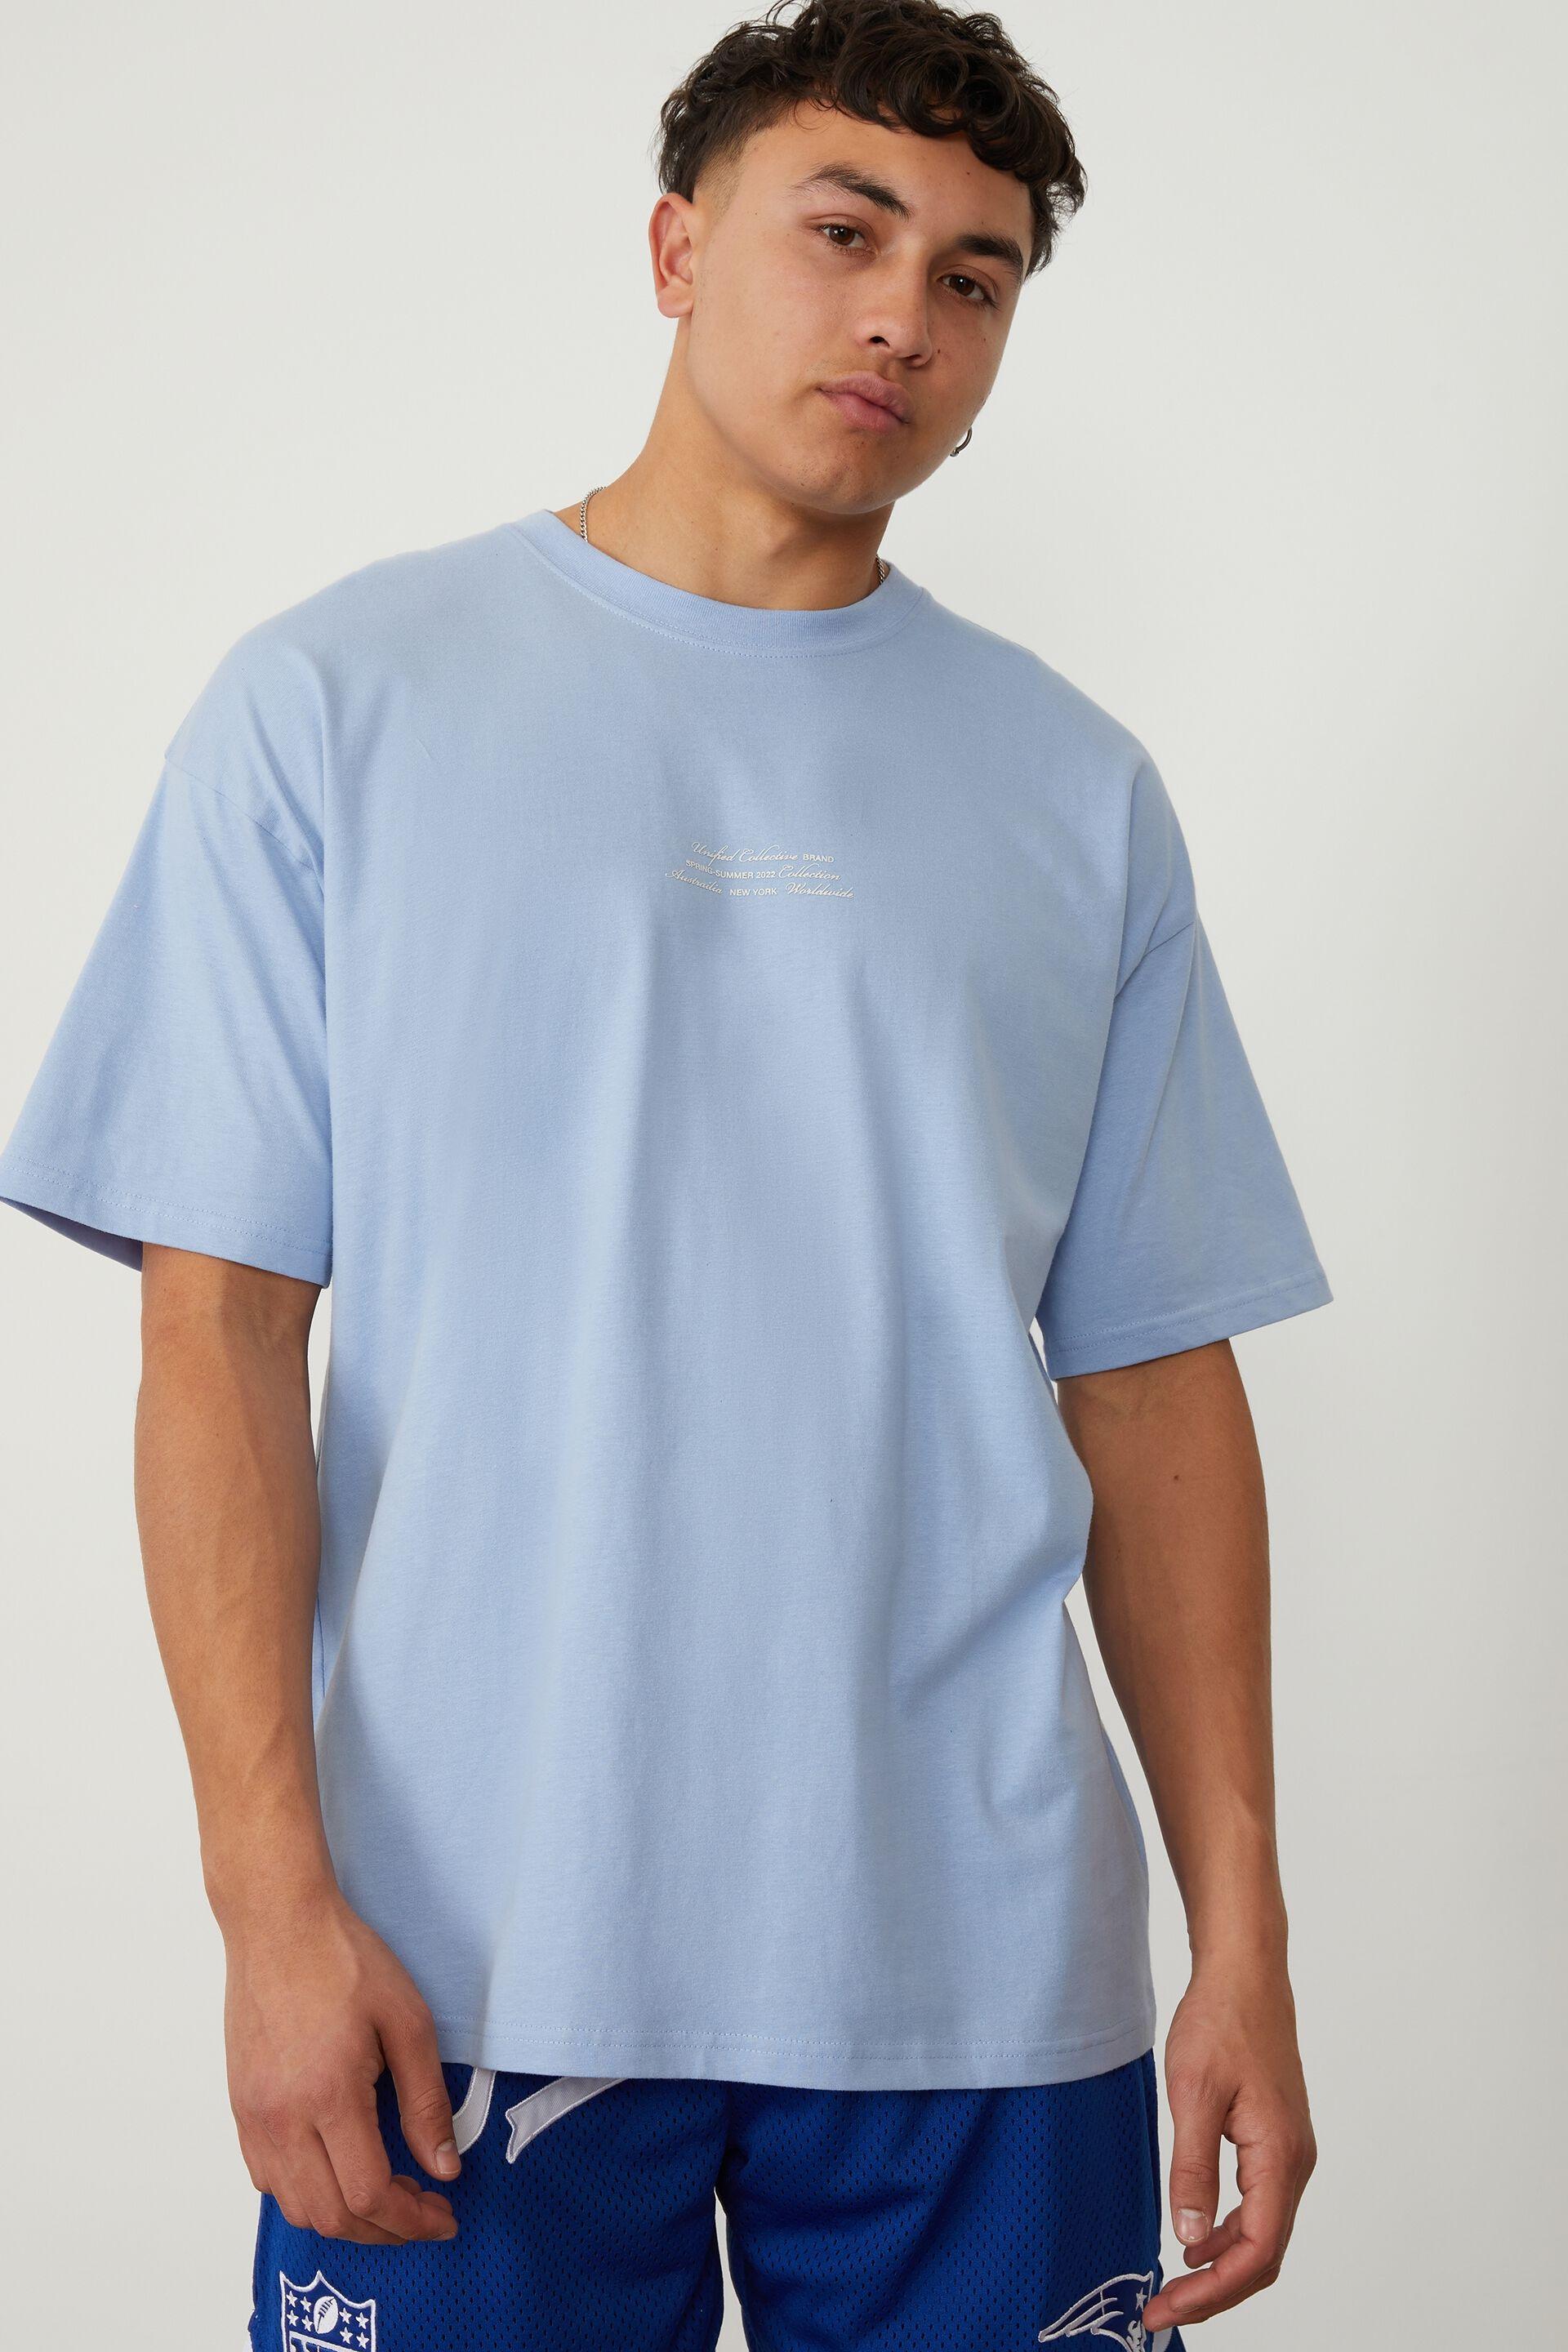 Oversized graphic t shirt - carolina blue/uc triple Factorie T-Shirts ...